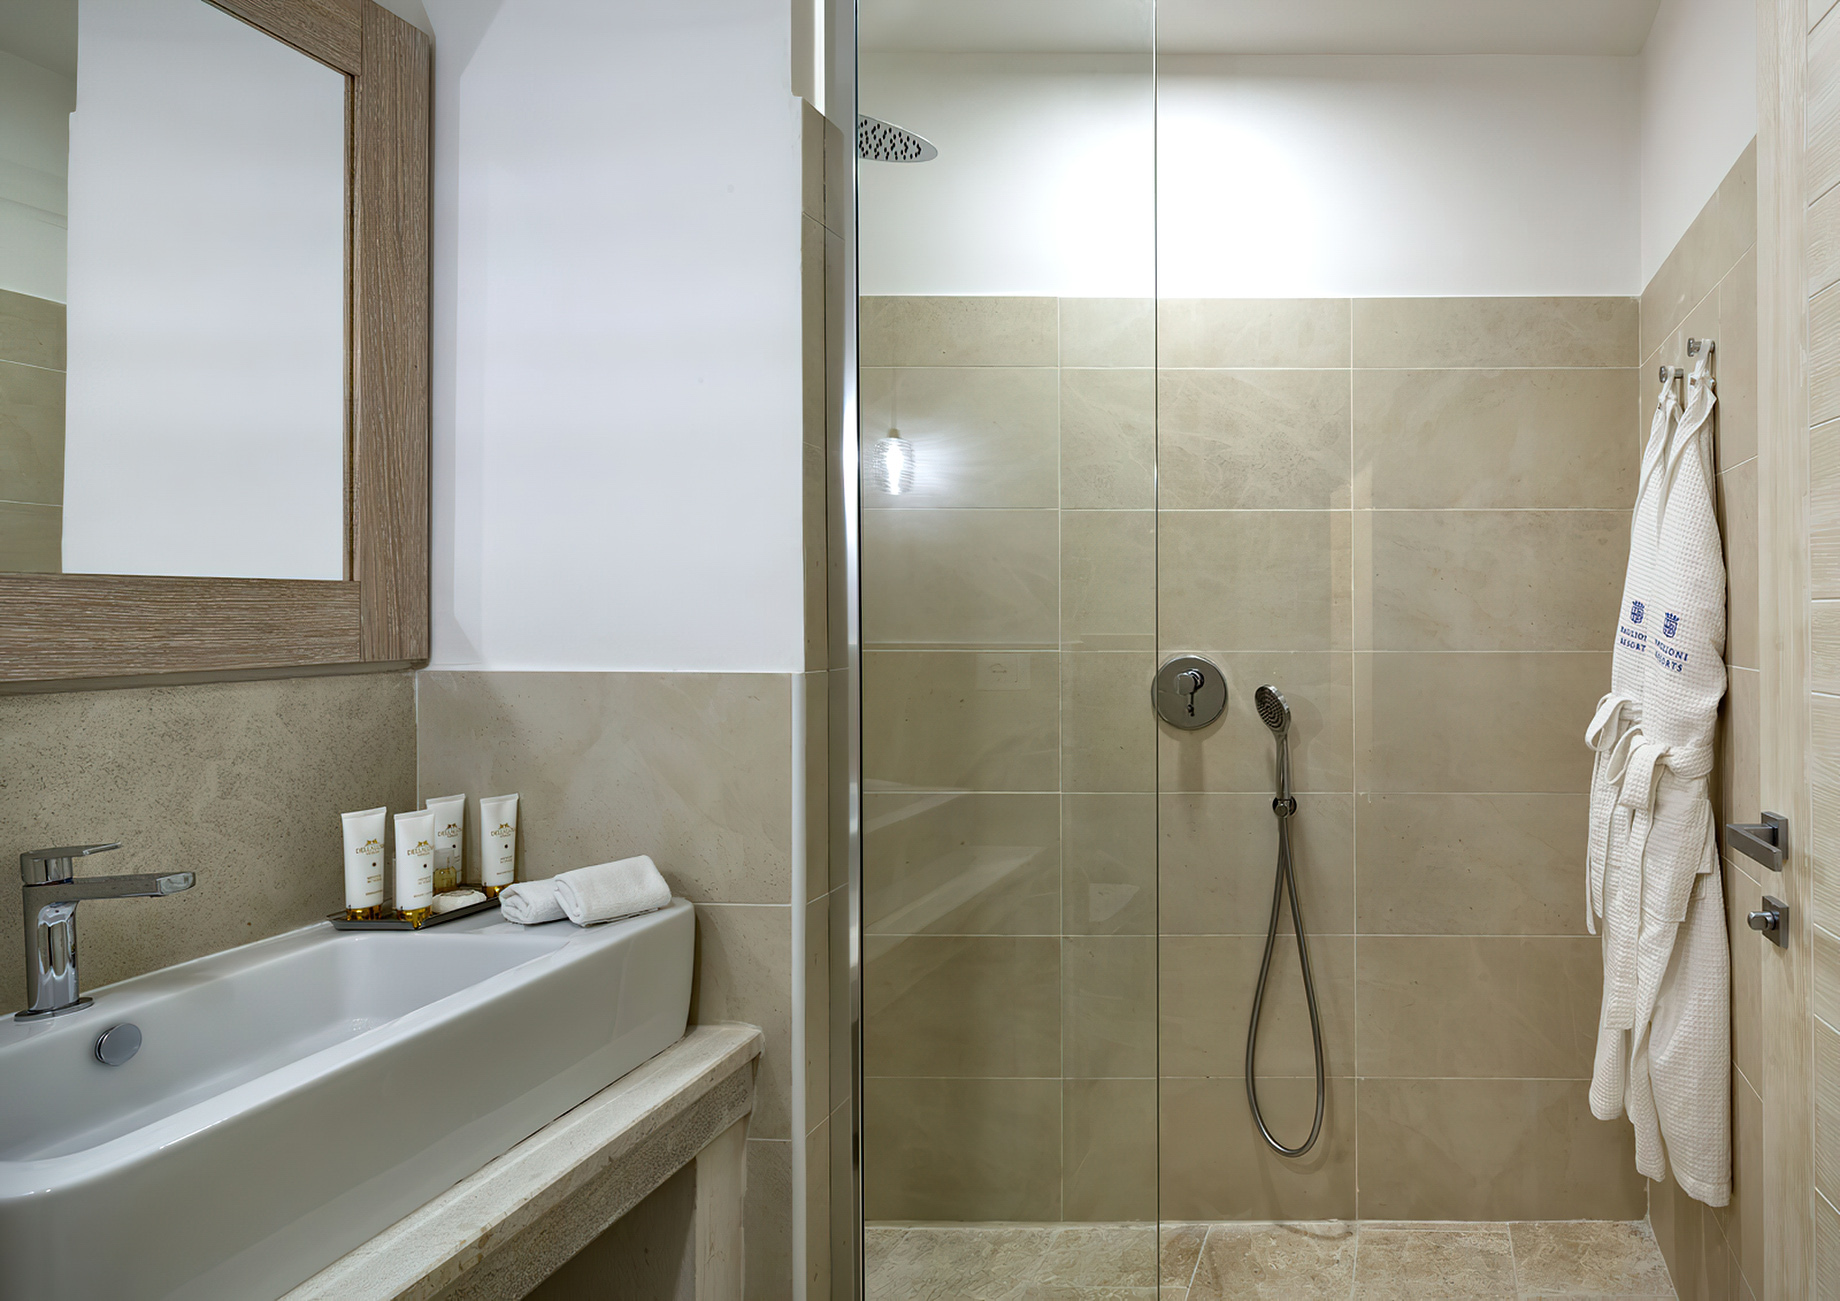 Baglioni Resort Sardinia - San Teodoro, Sardegna, Italy - San Pietro Suite Bathroom